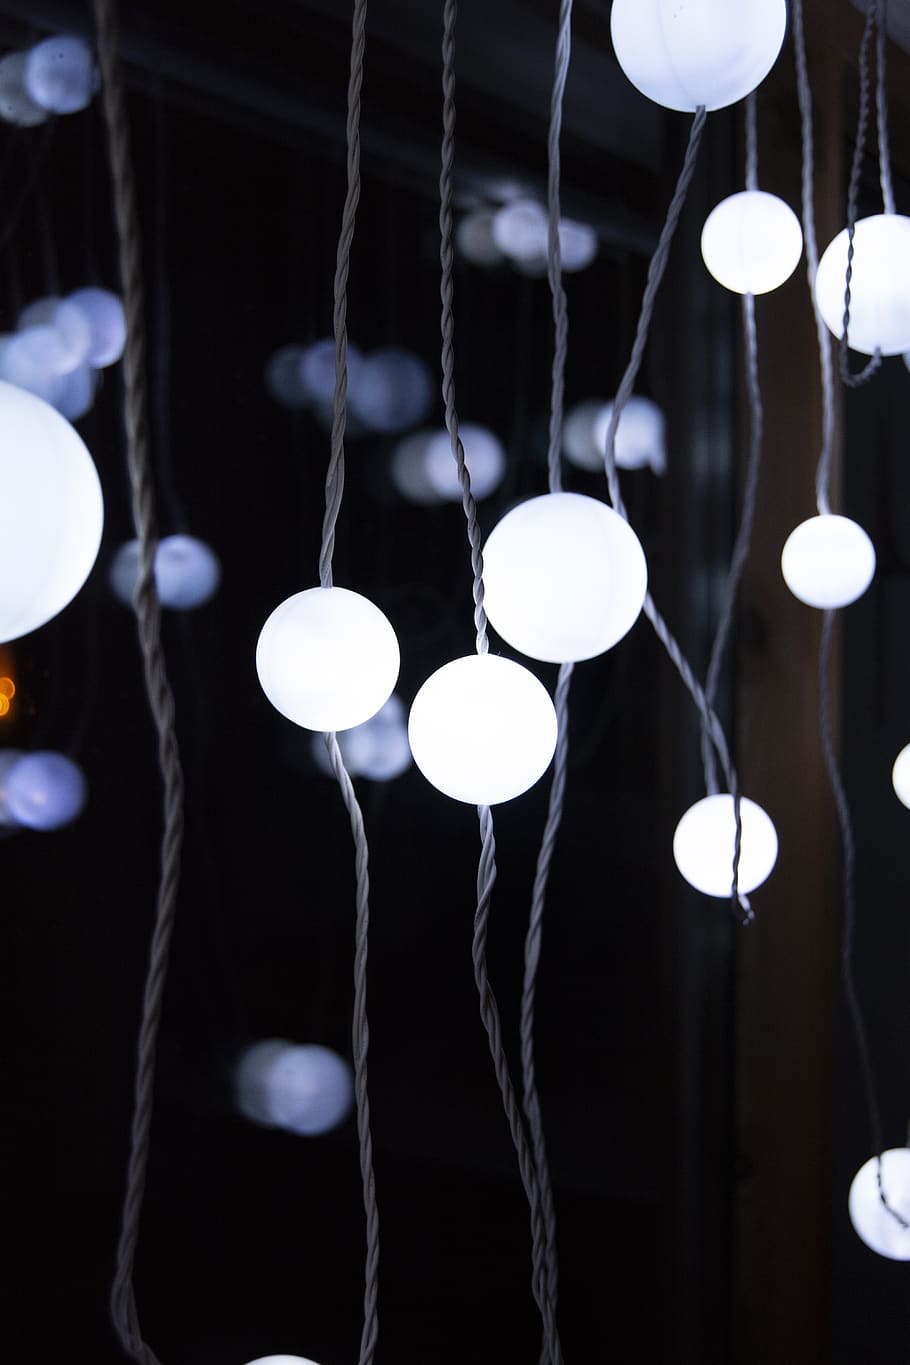 glow, balls, sphere, light, decoration, round, orb, lighting equipment, hanging, illuminated